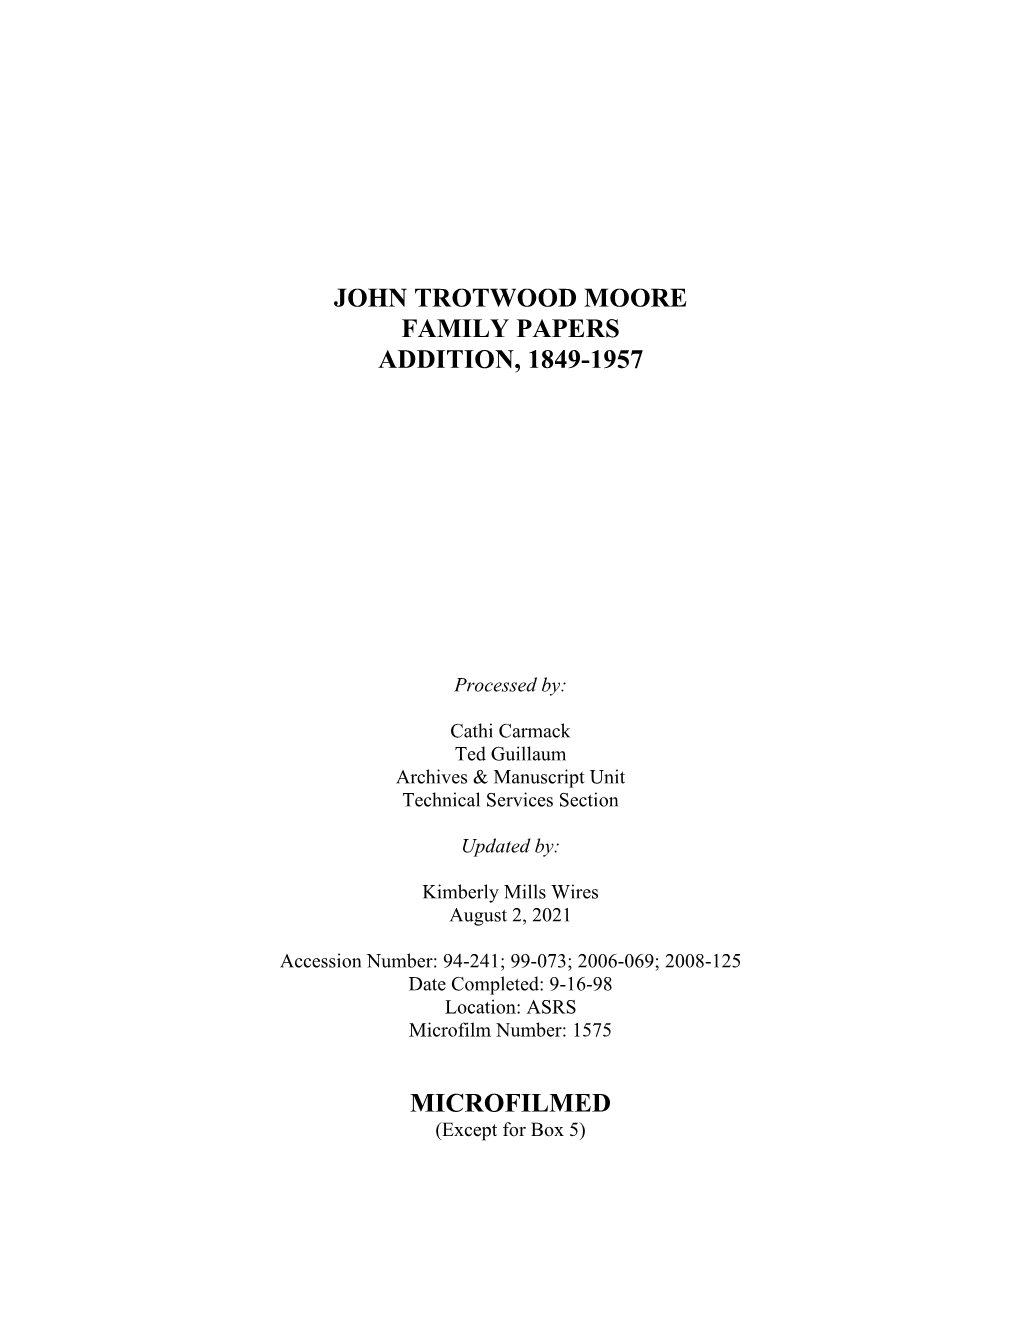 Moore, John Trotwood Papers